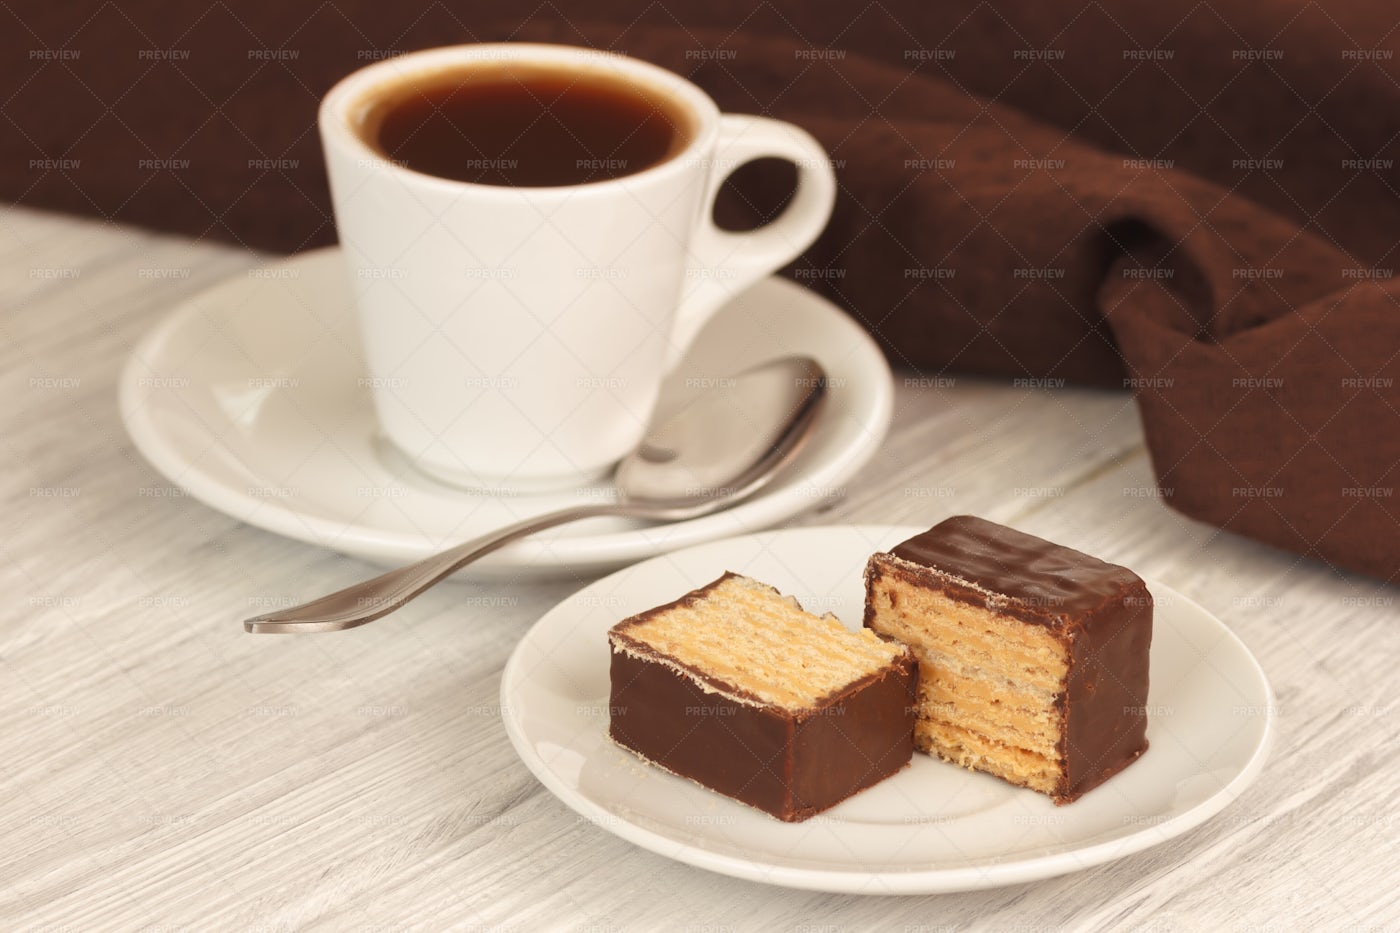 Dessert With Coffee: Stock Photos